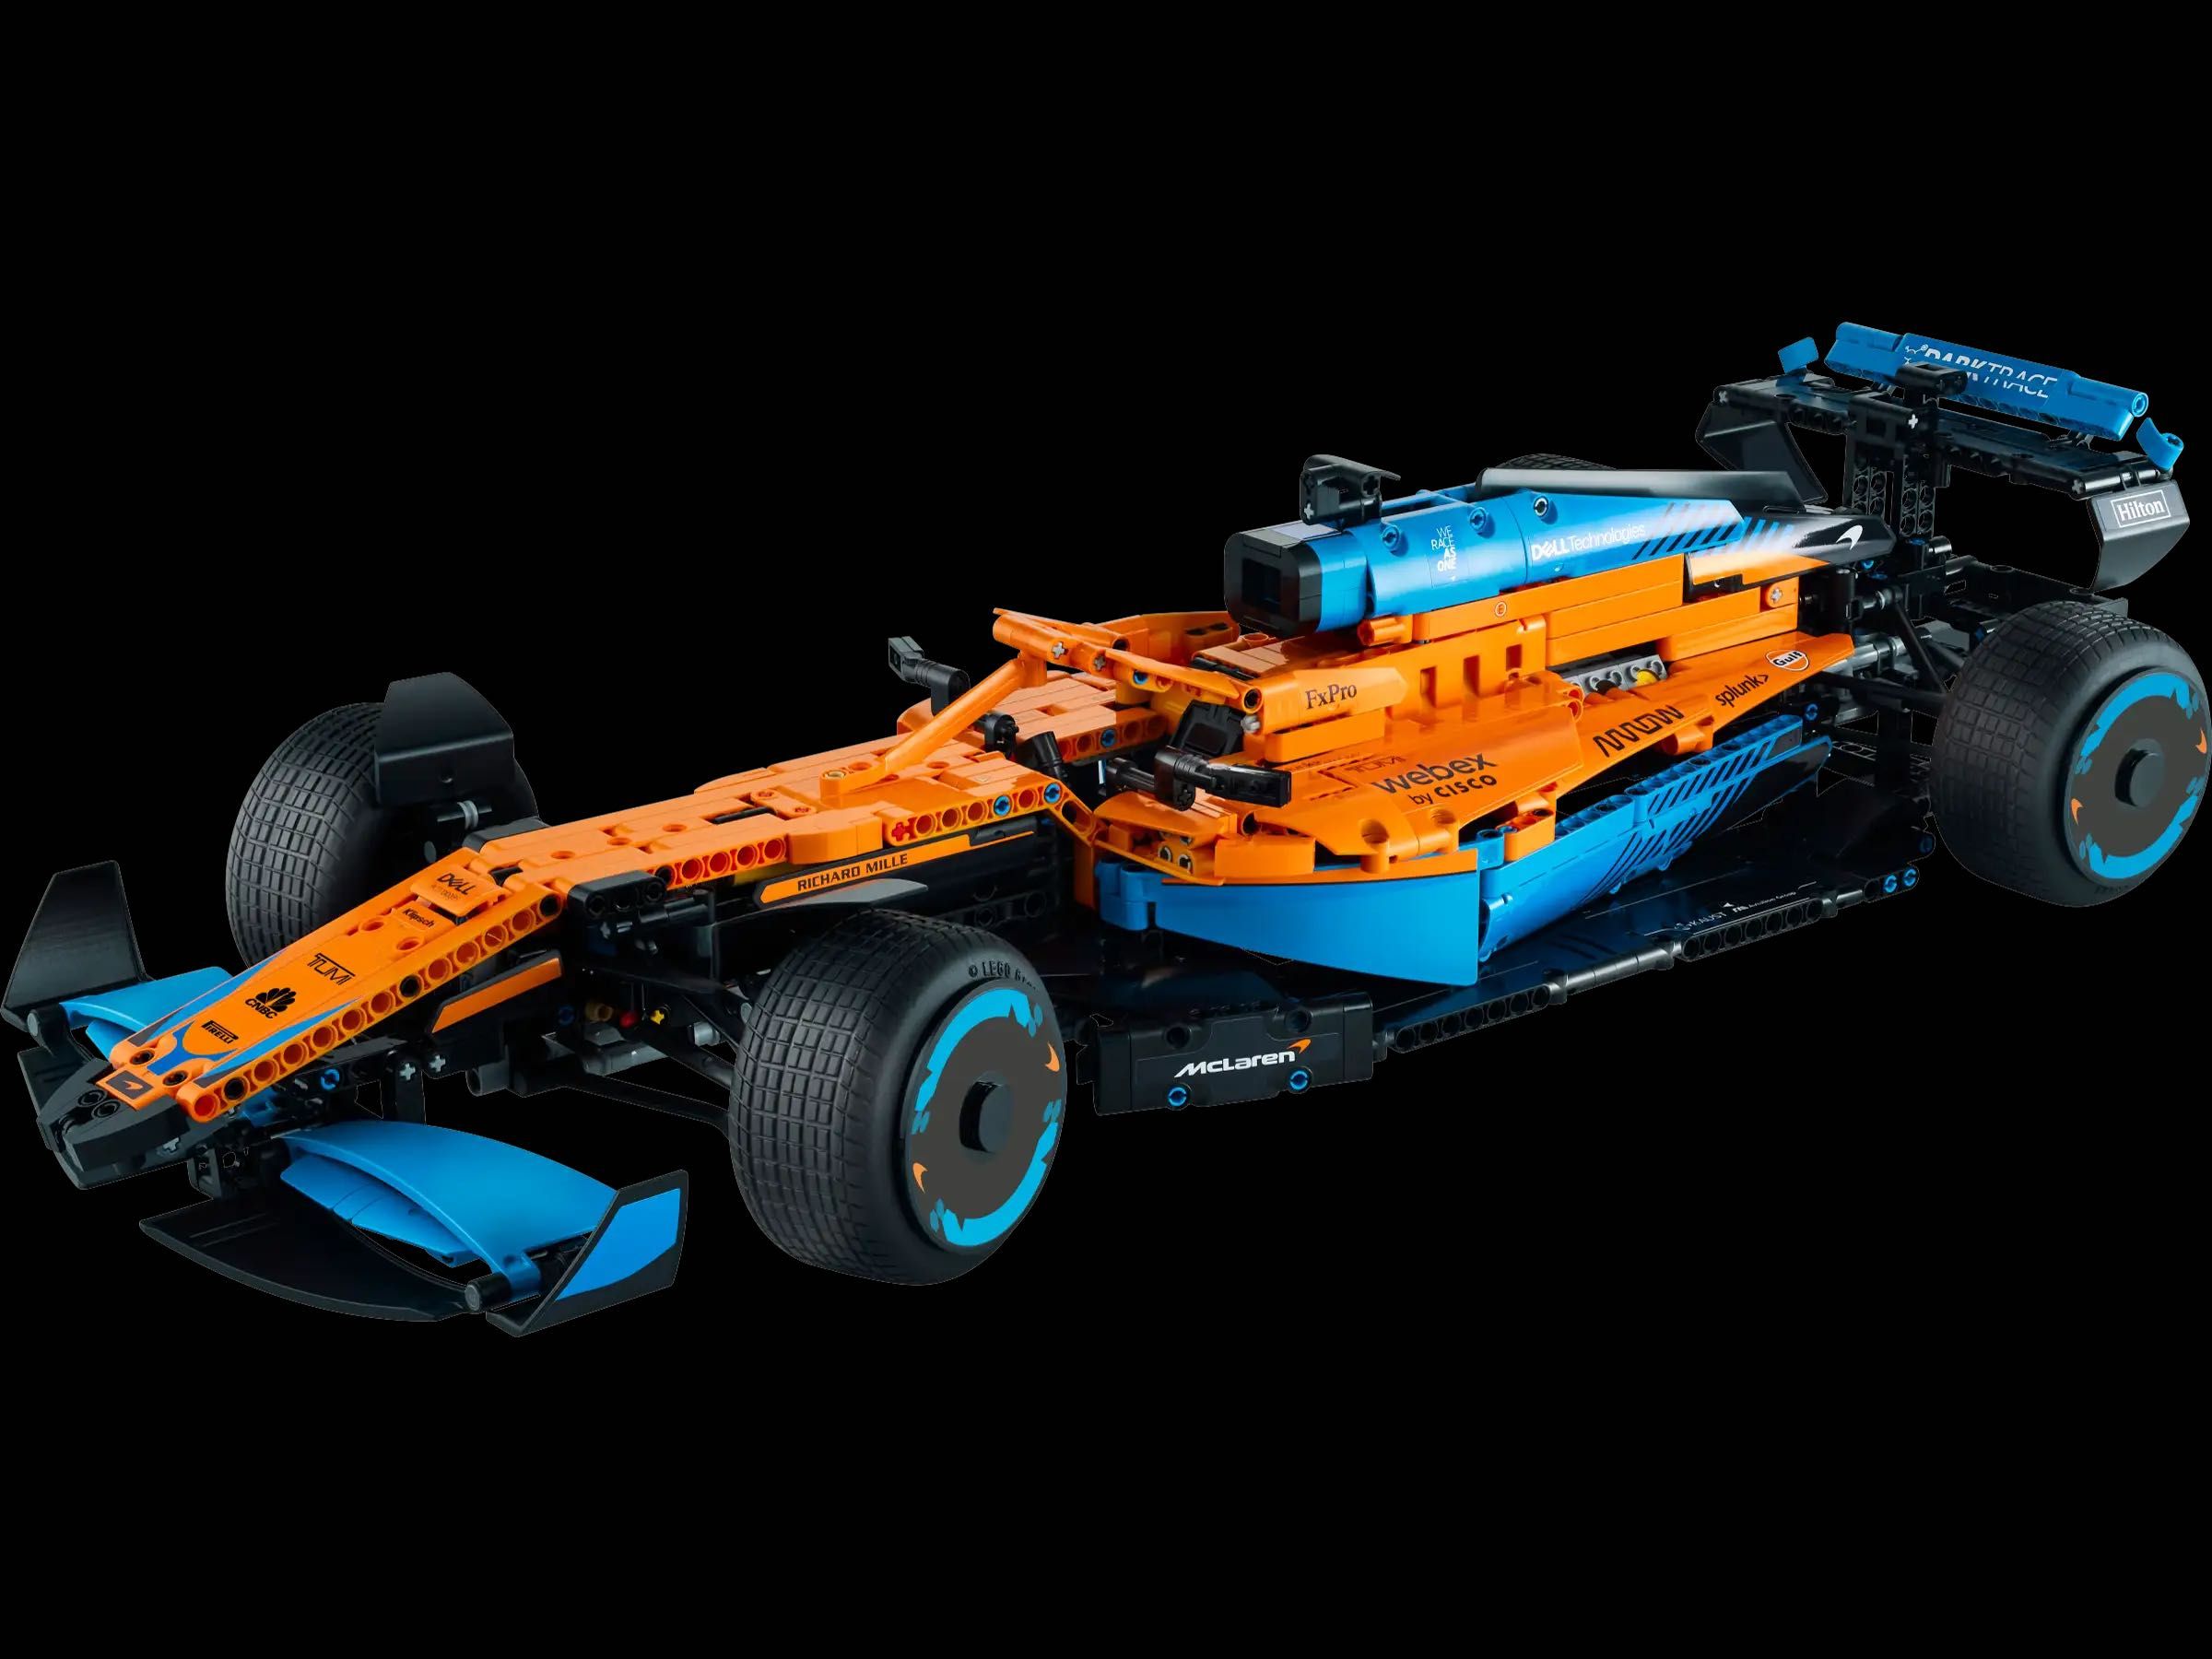 LEGO Technic McLaren Formula 1 Race Car